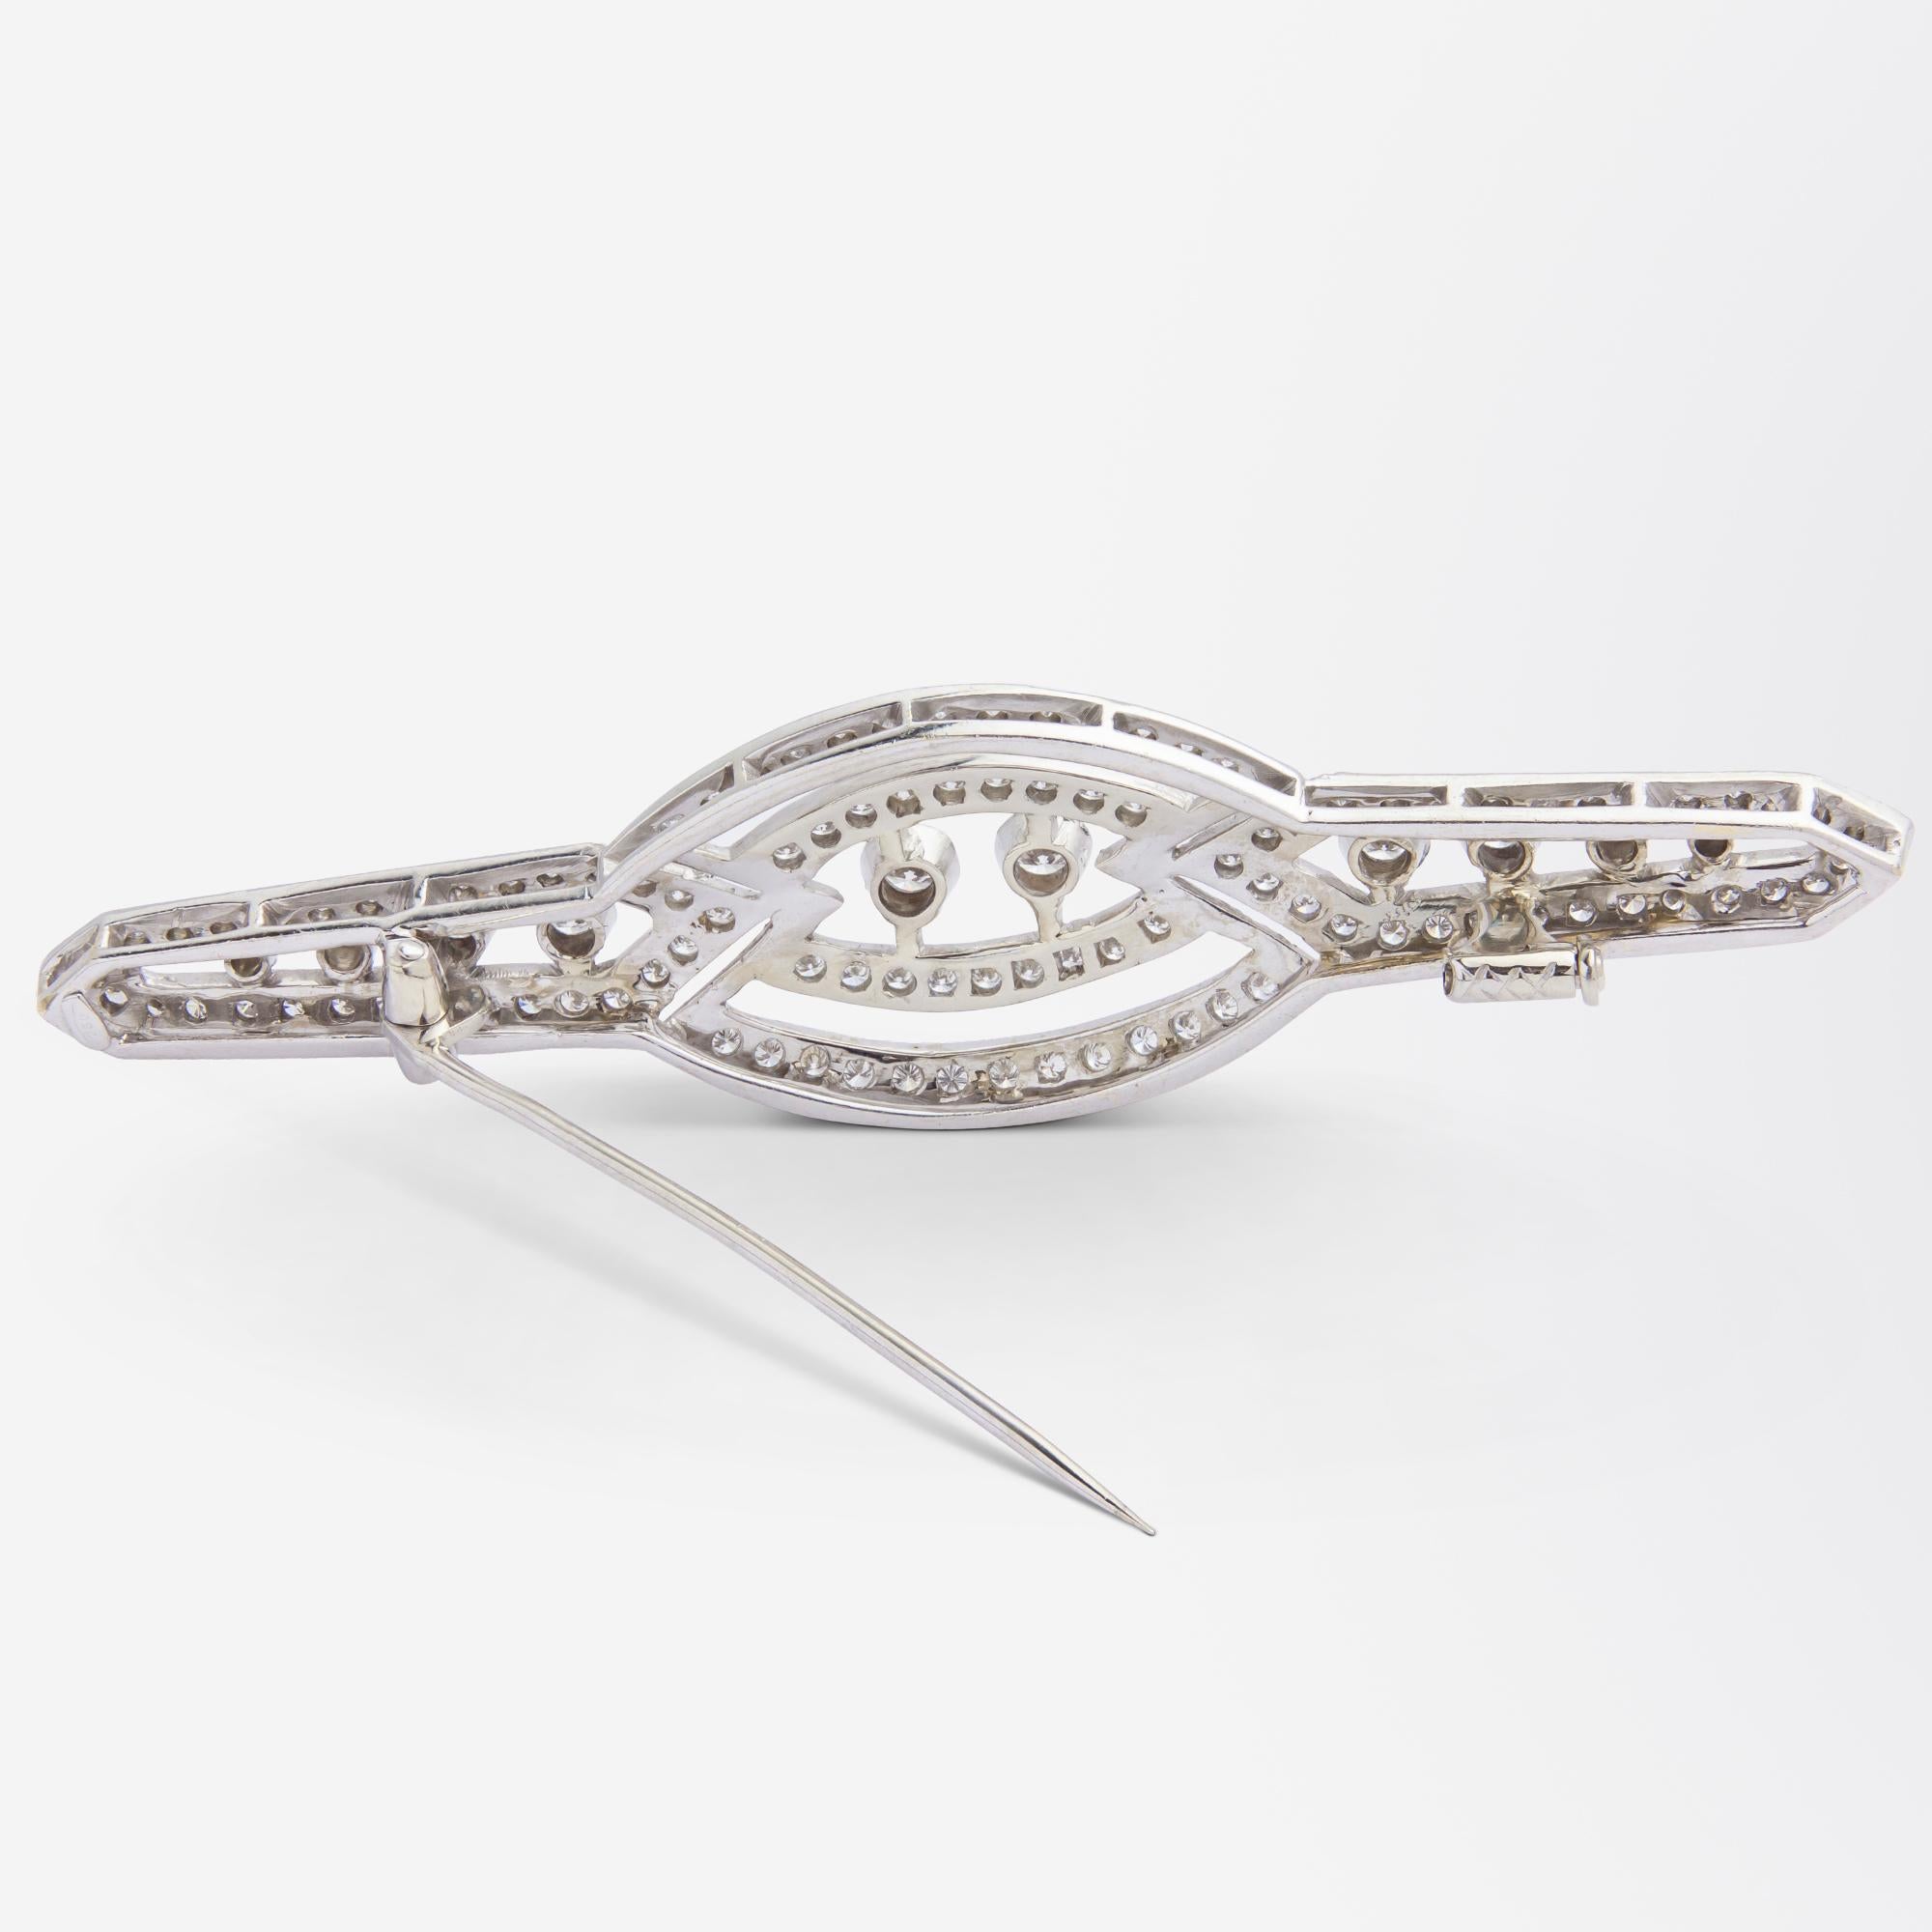 Brilliant Cut Art Deco Style Diamond Brooch in 18 Karat White Gold For Sale